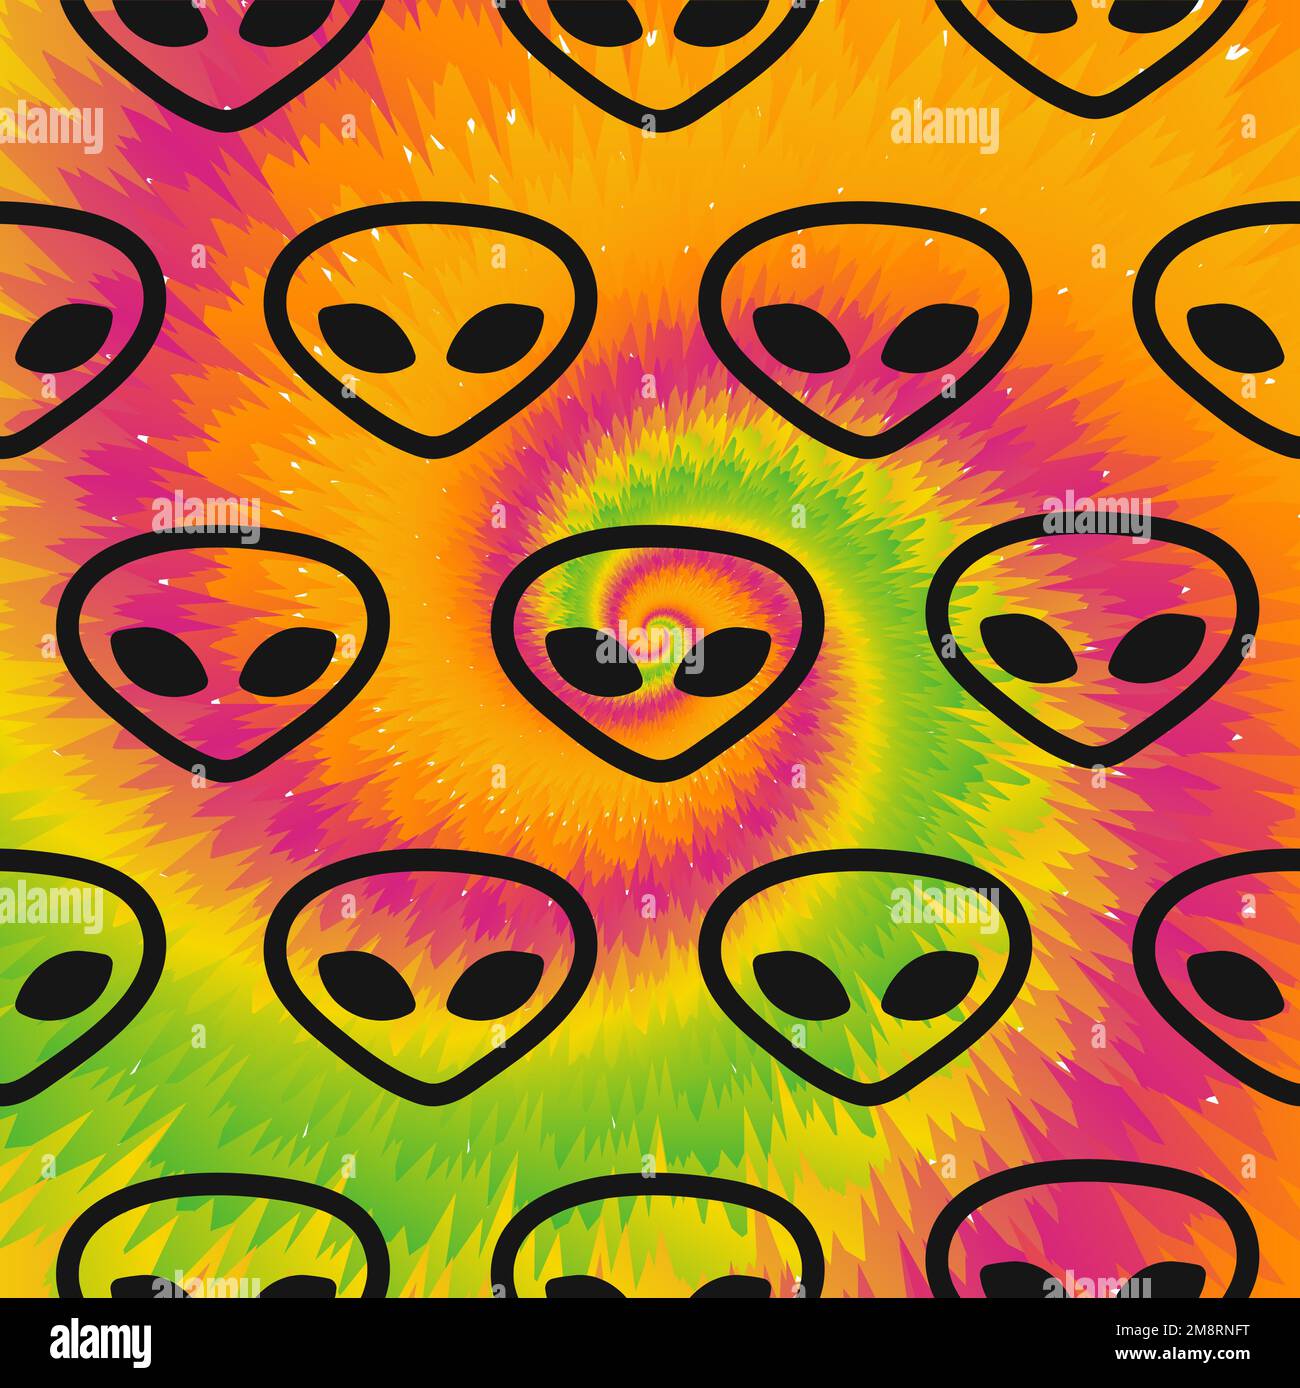 Alien faces,tie dye background.Vector tie dye crazy cartoon character illustration.Ufo,alien,tiedye background,pattern,wallpaper print concept Stock Vector